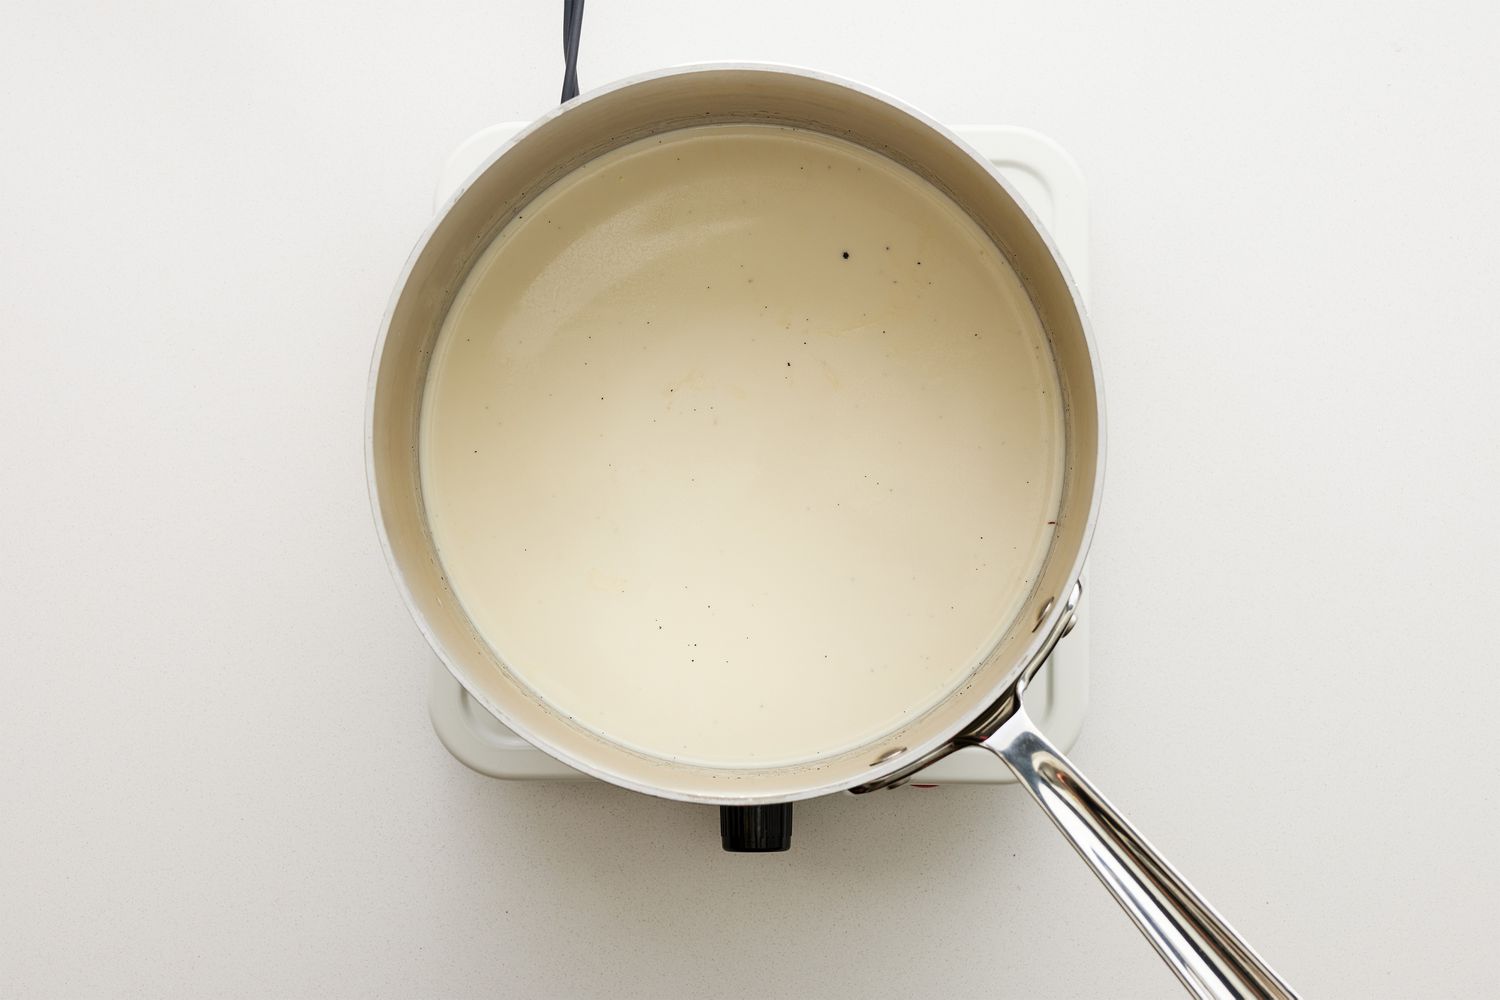 A pot of heavy cream, milk, and a split vanilla bean pod